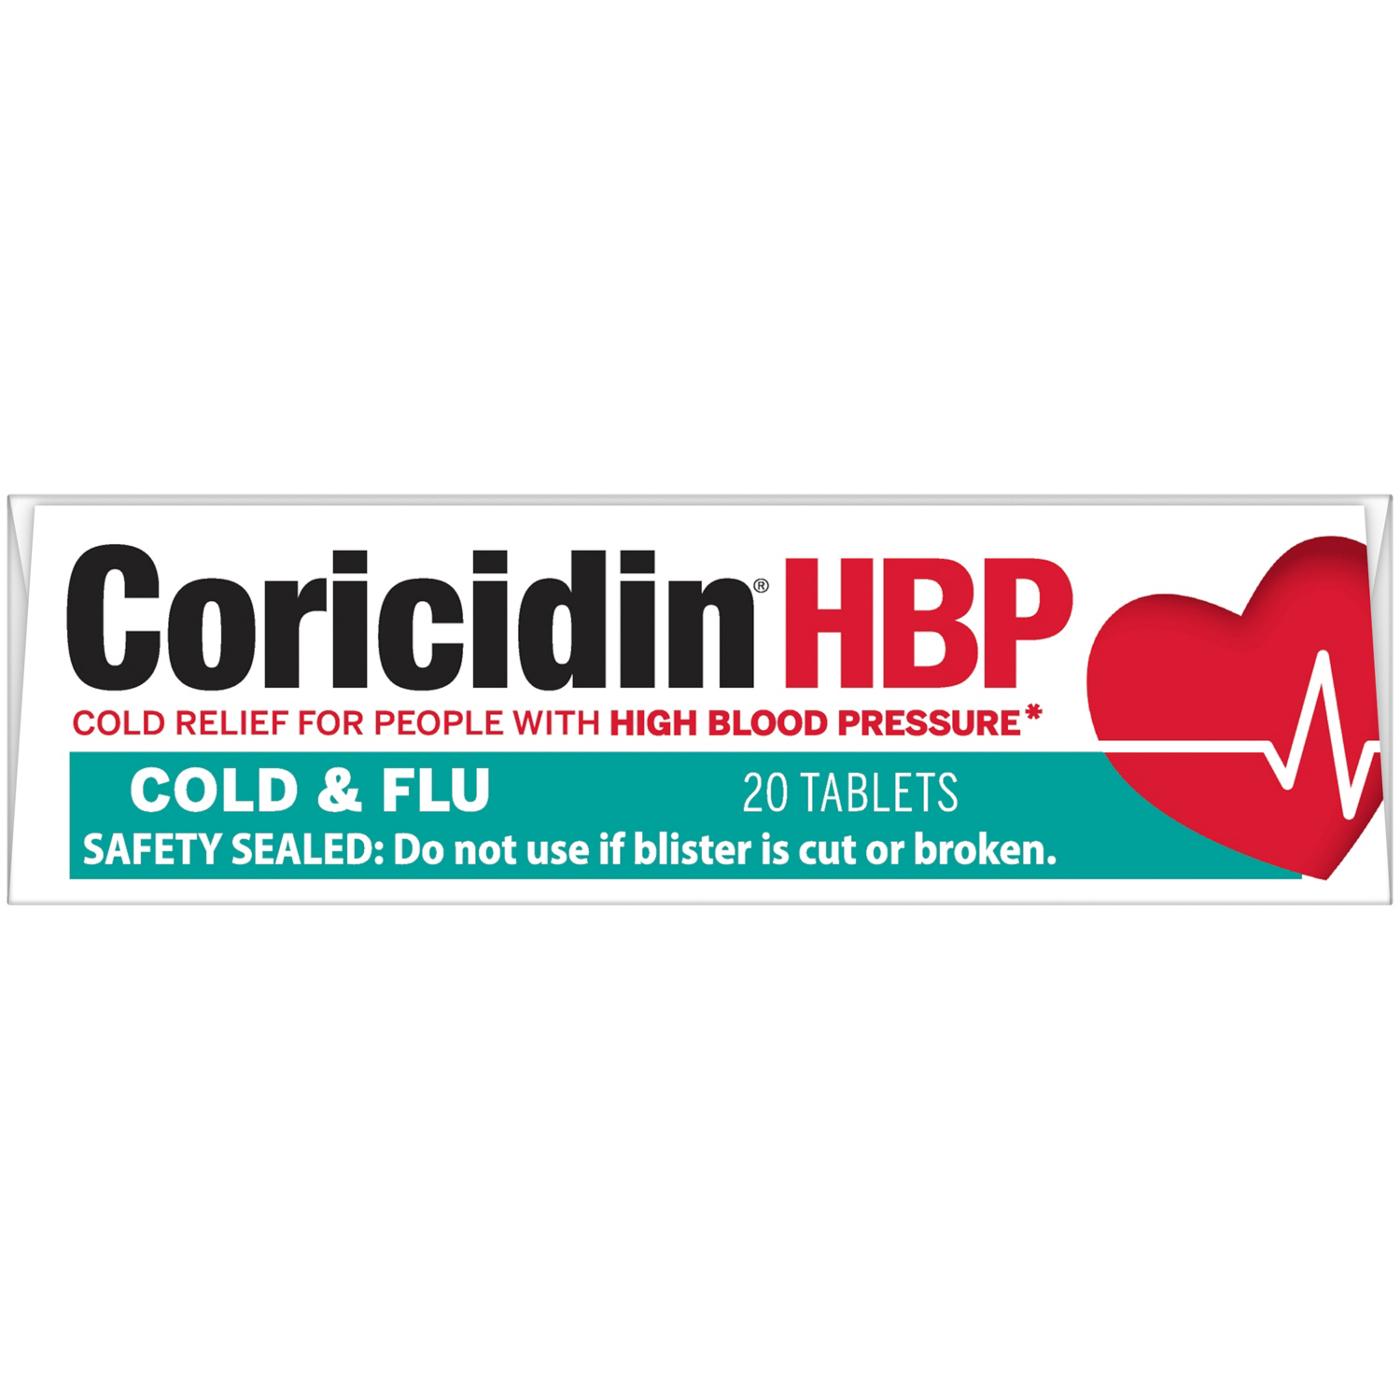 Coricidin HBP Cold & Flu Tablets; image 4 of 4